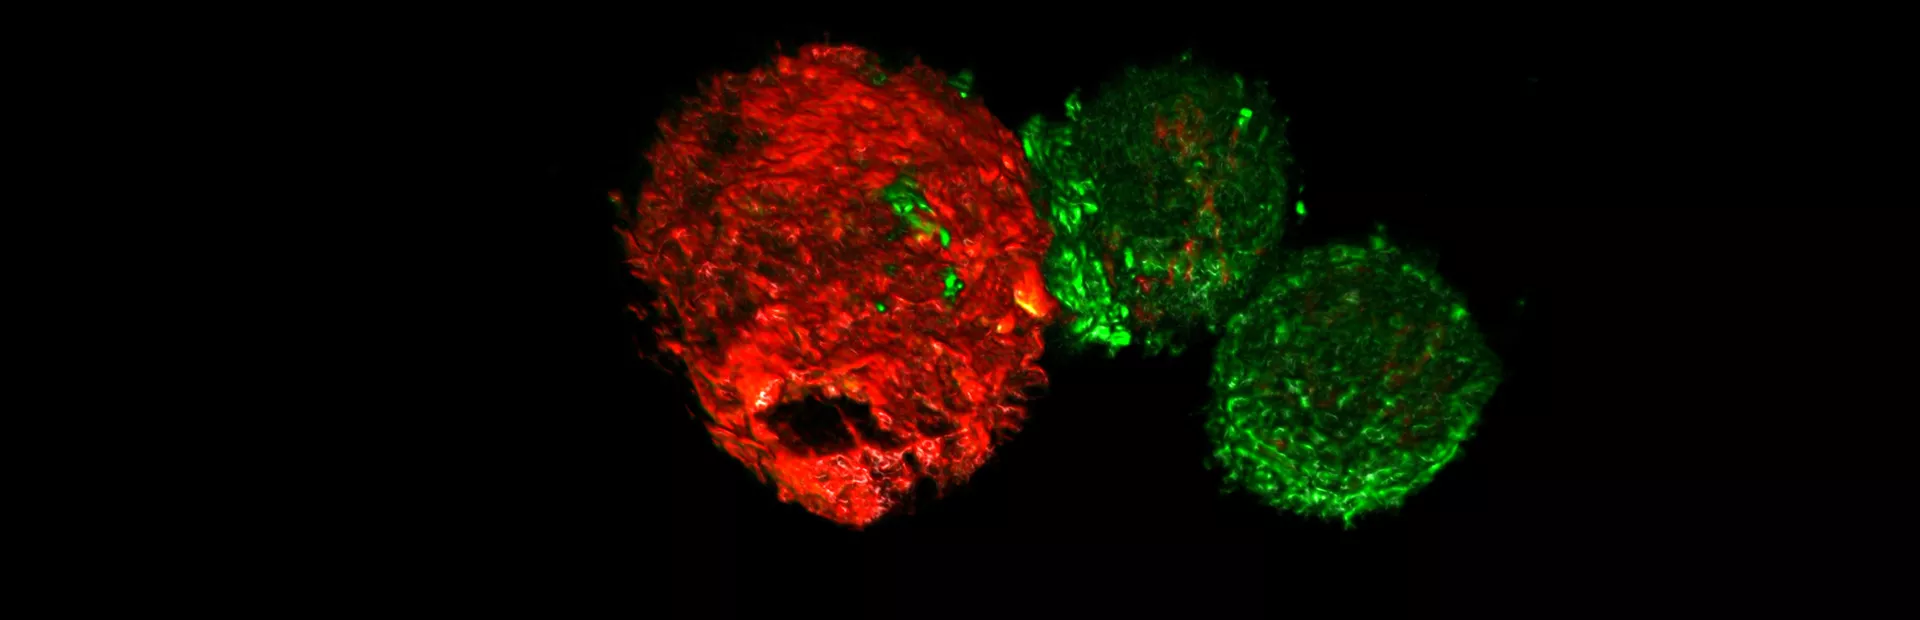 Eine CAR-T Zelle (grün) greift eine Tumorzelle (rot) an / Une cellule CAR-T (verte) attaque une cellule tumorale (rouge)